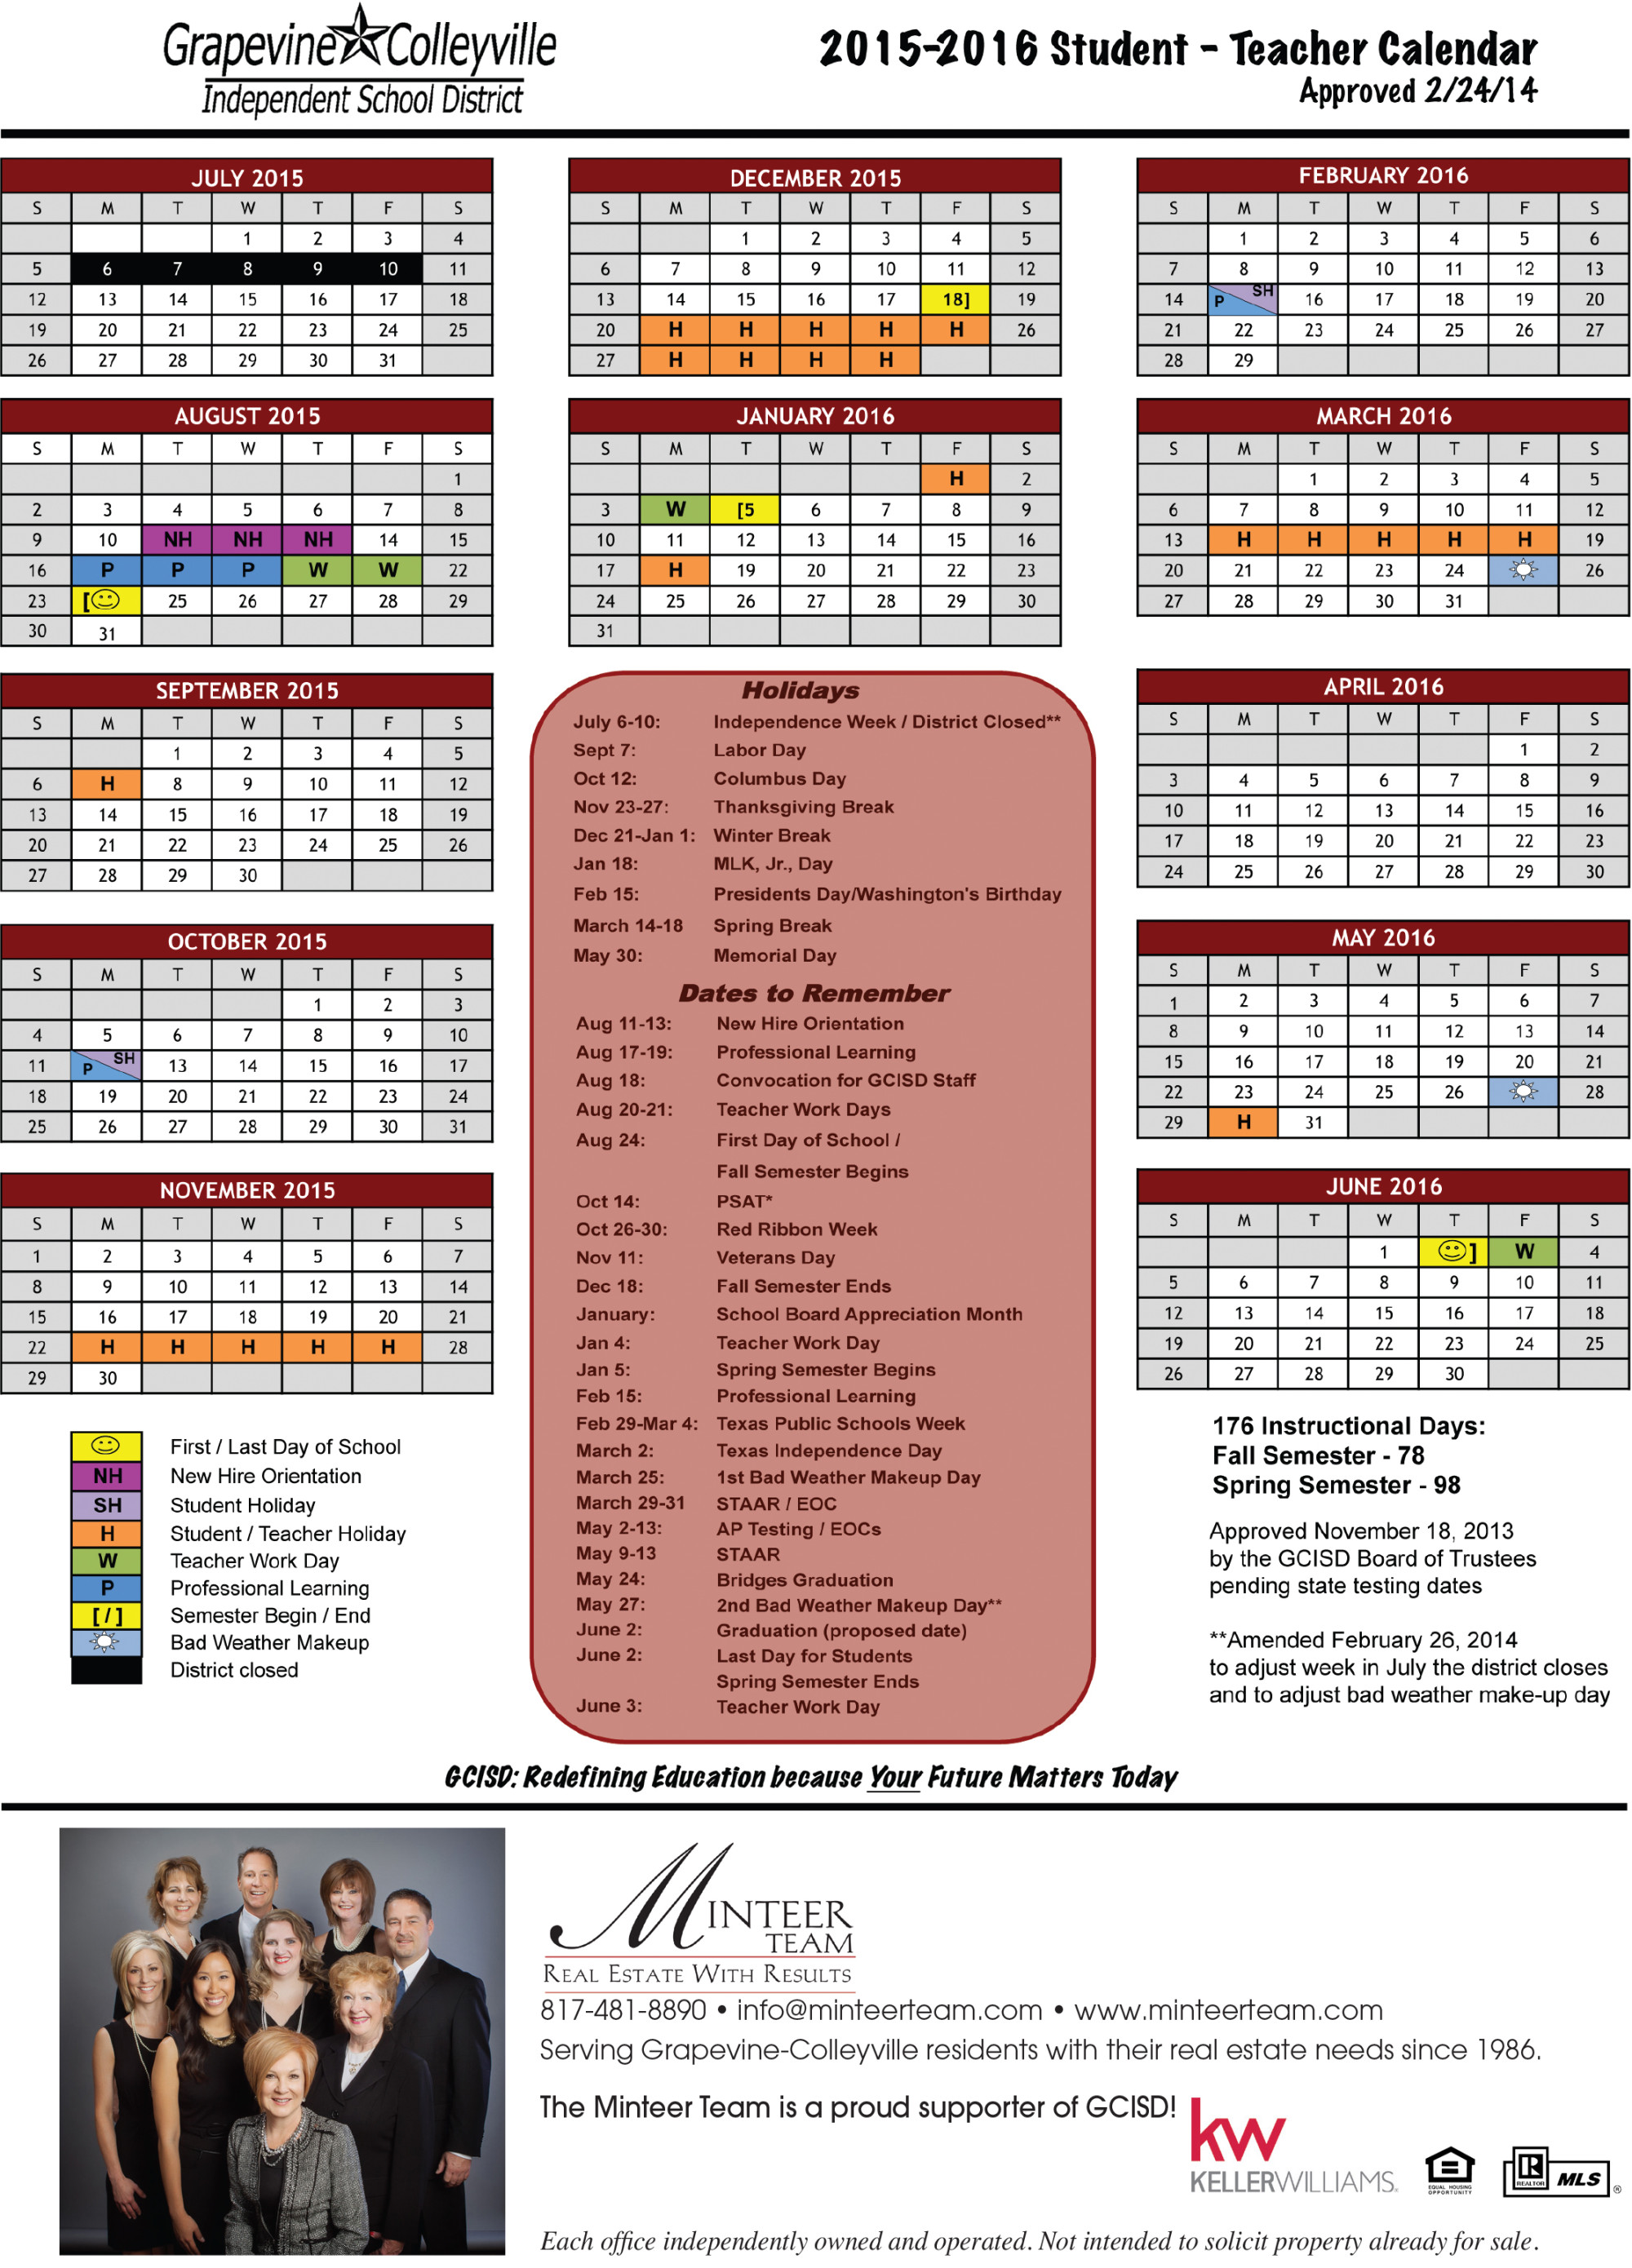 School Calendar for GCISD (-) - Minteer Real Estate Team